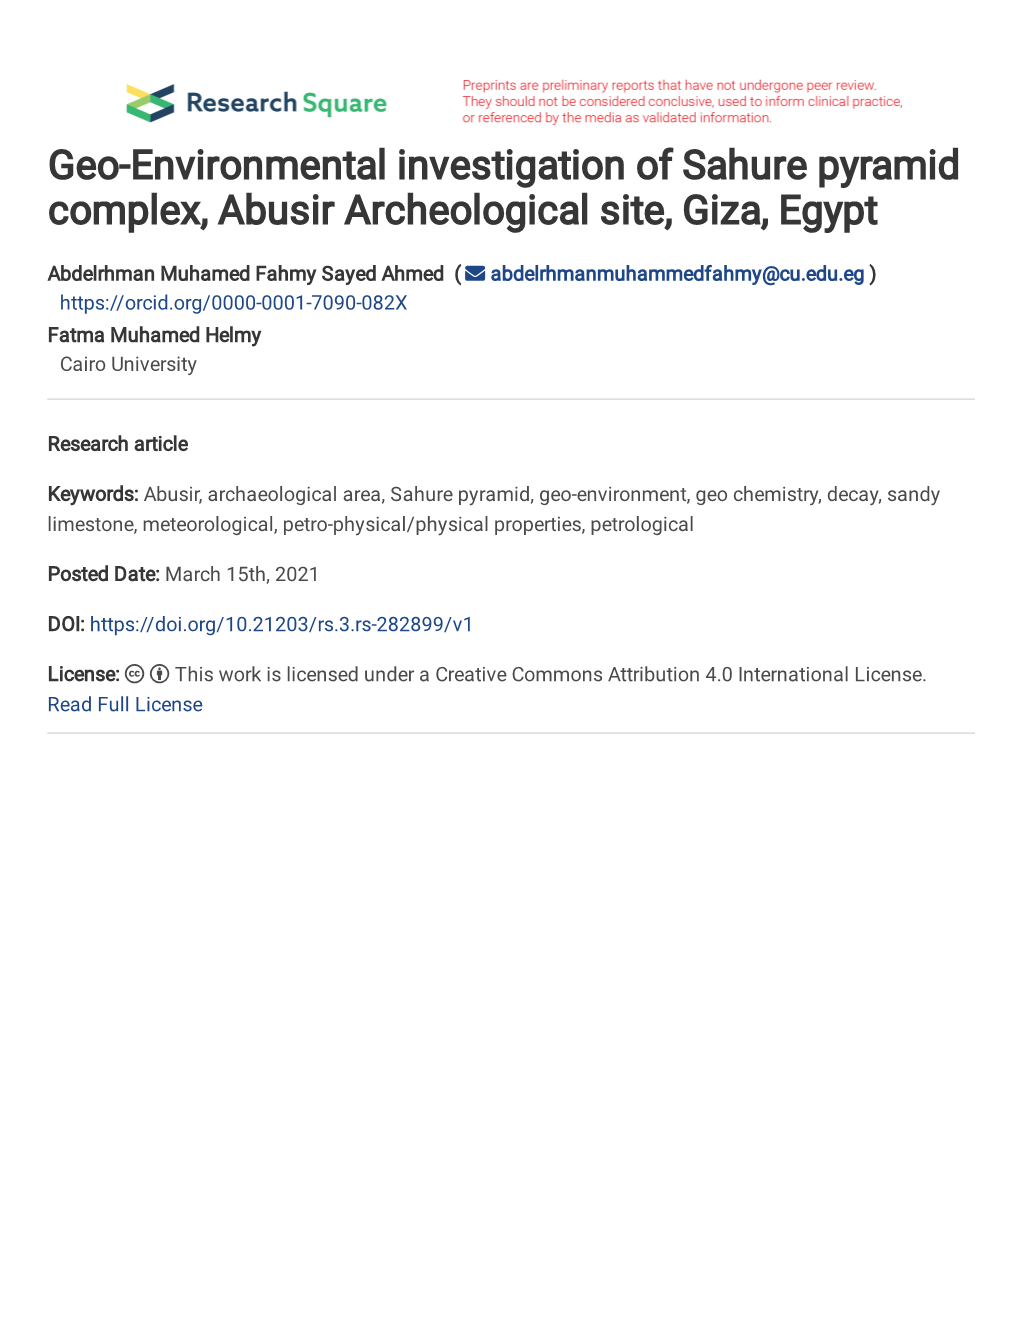 Geo-Environmental Investigation of Sahure Pyramid 1 Complex, Abusir Archeological Site, Giza, Egypt 2